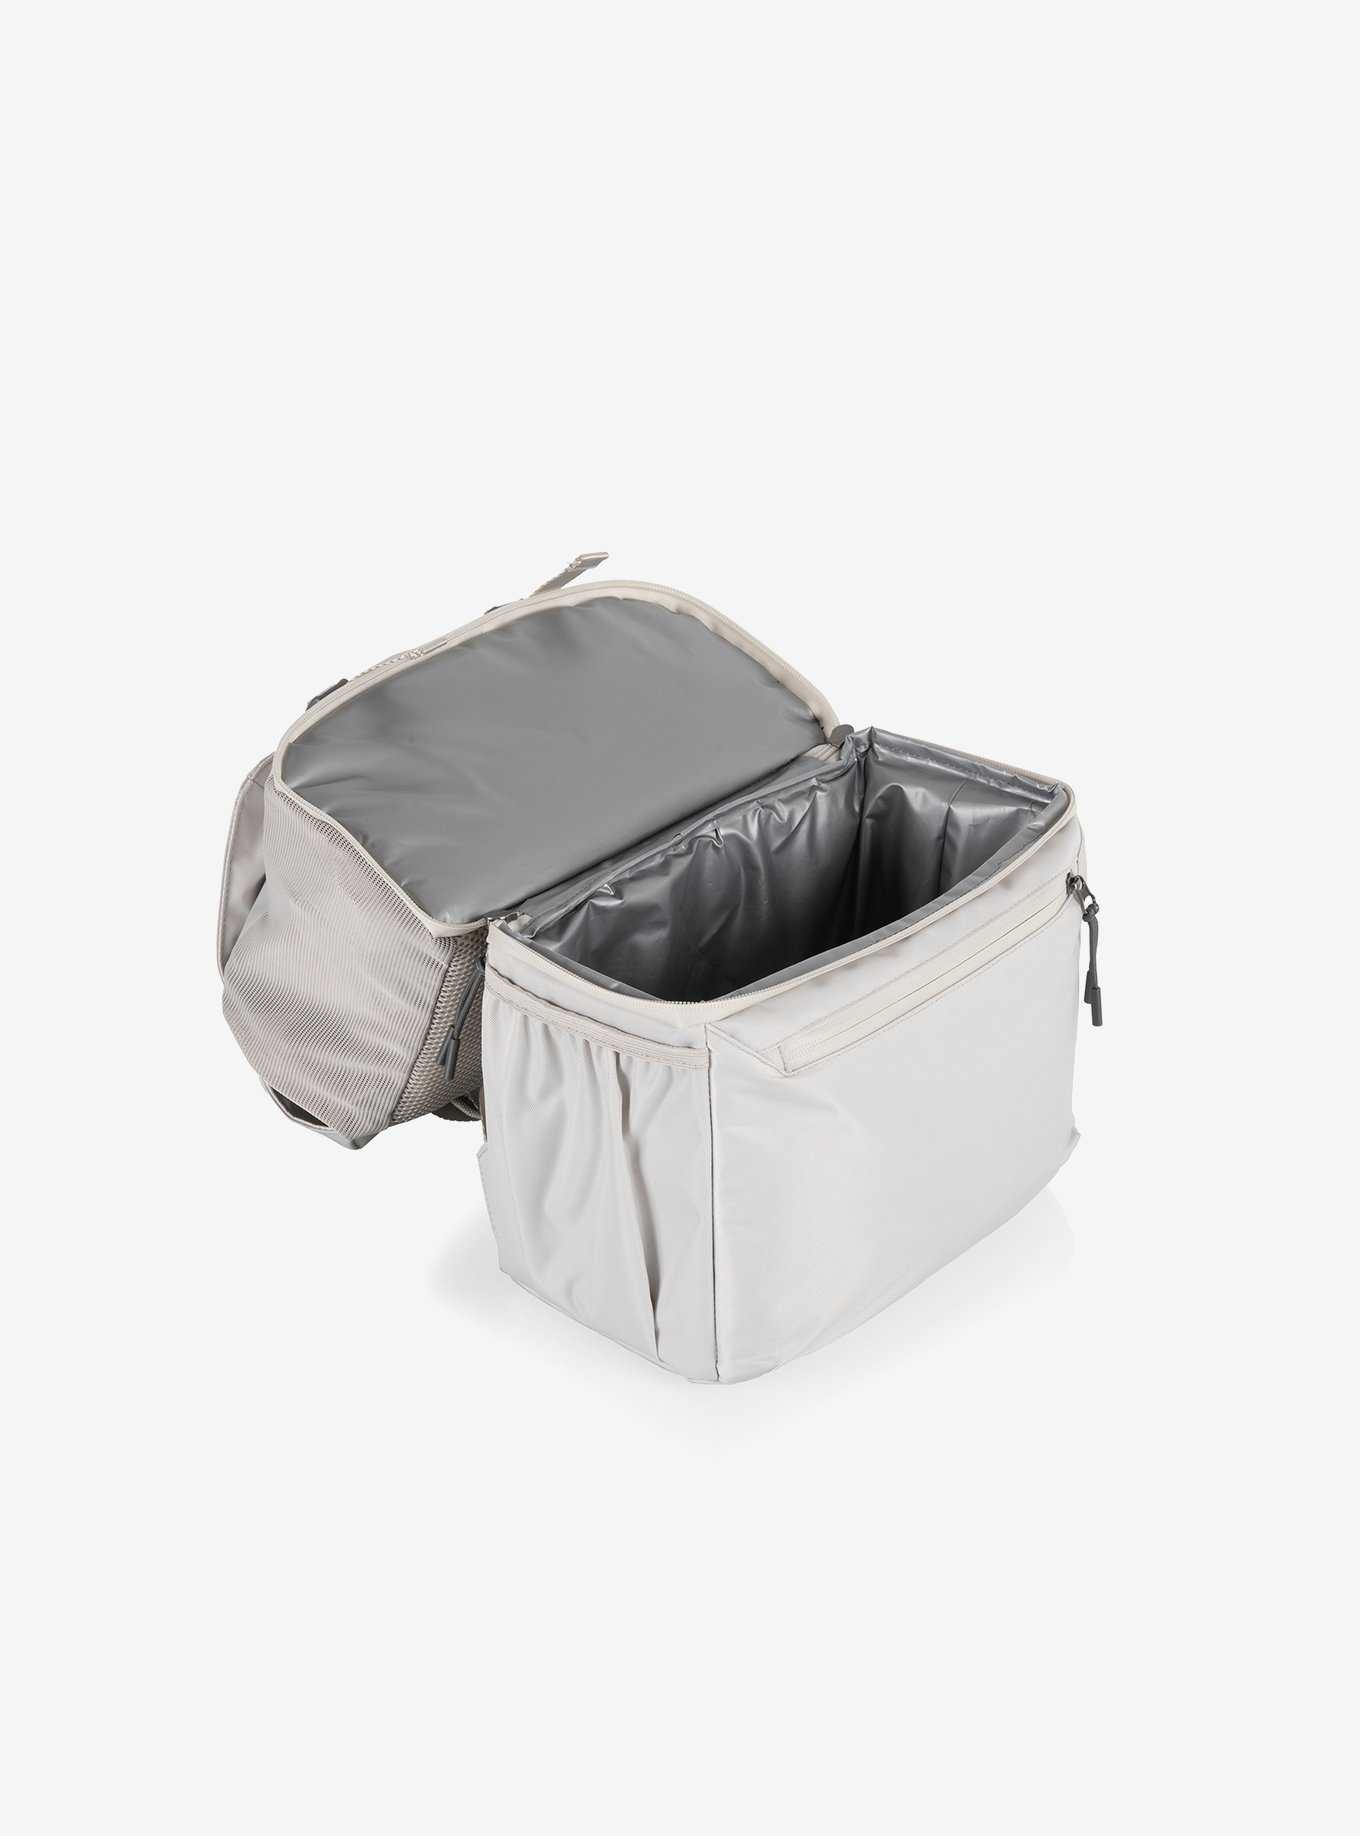 Tarana Halo Gray Backpack Cooler, , hi-res